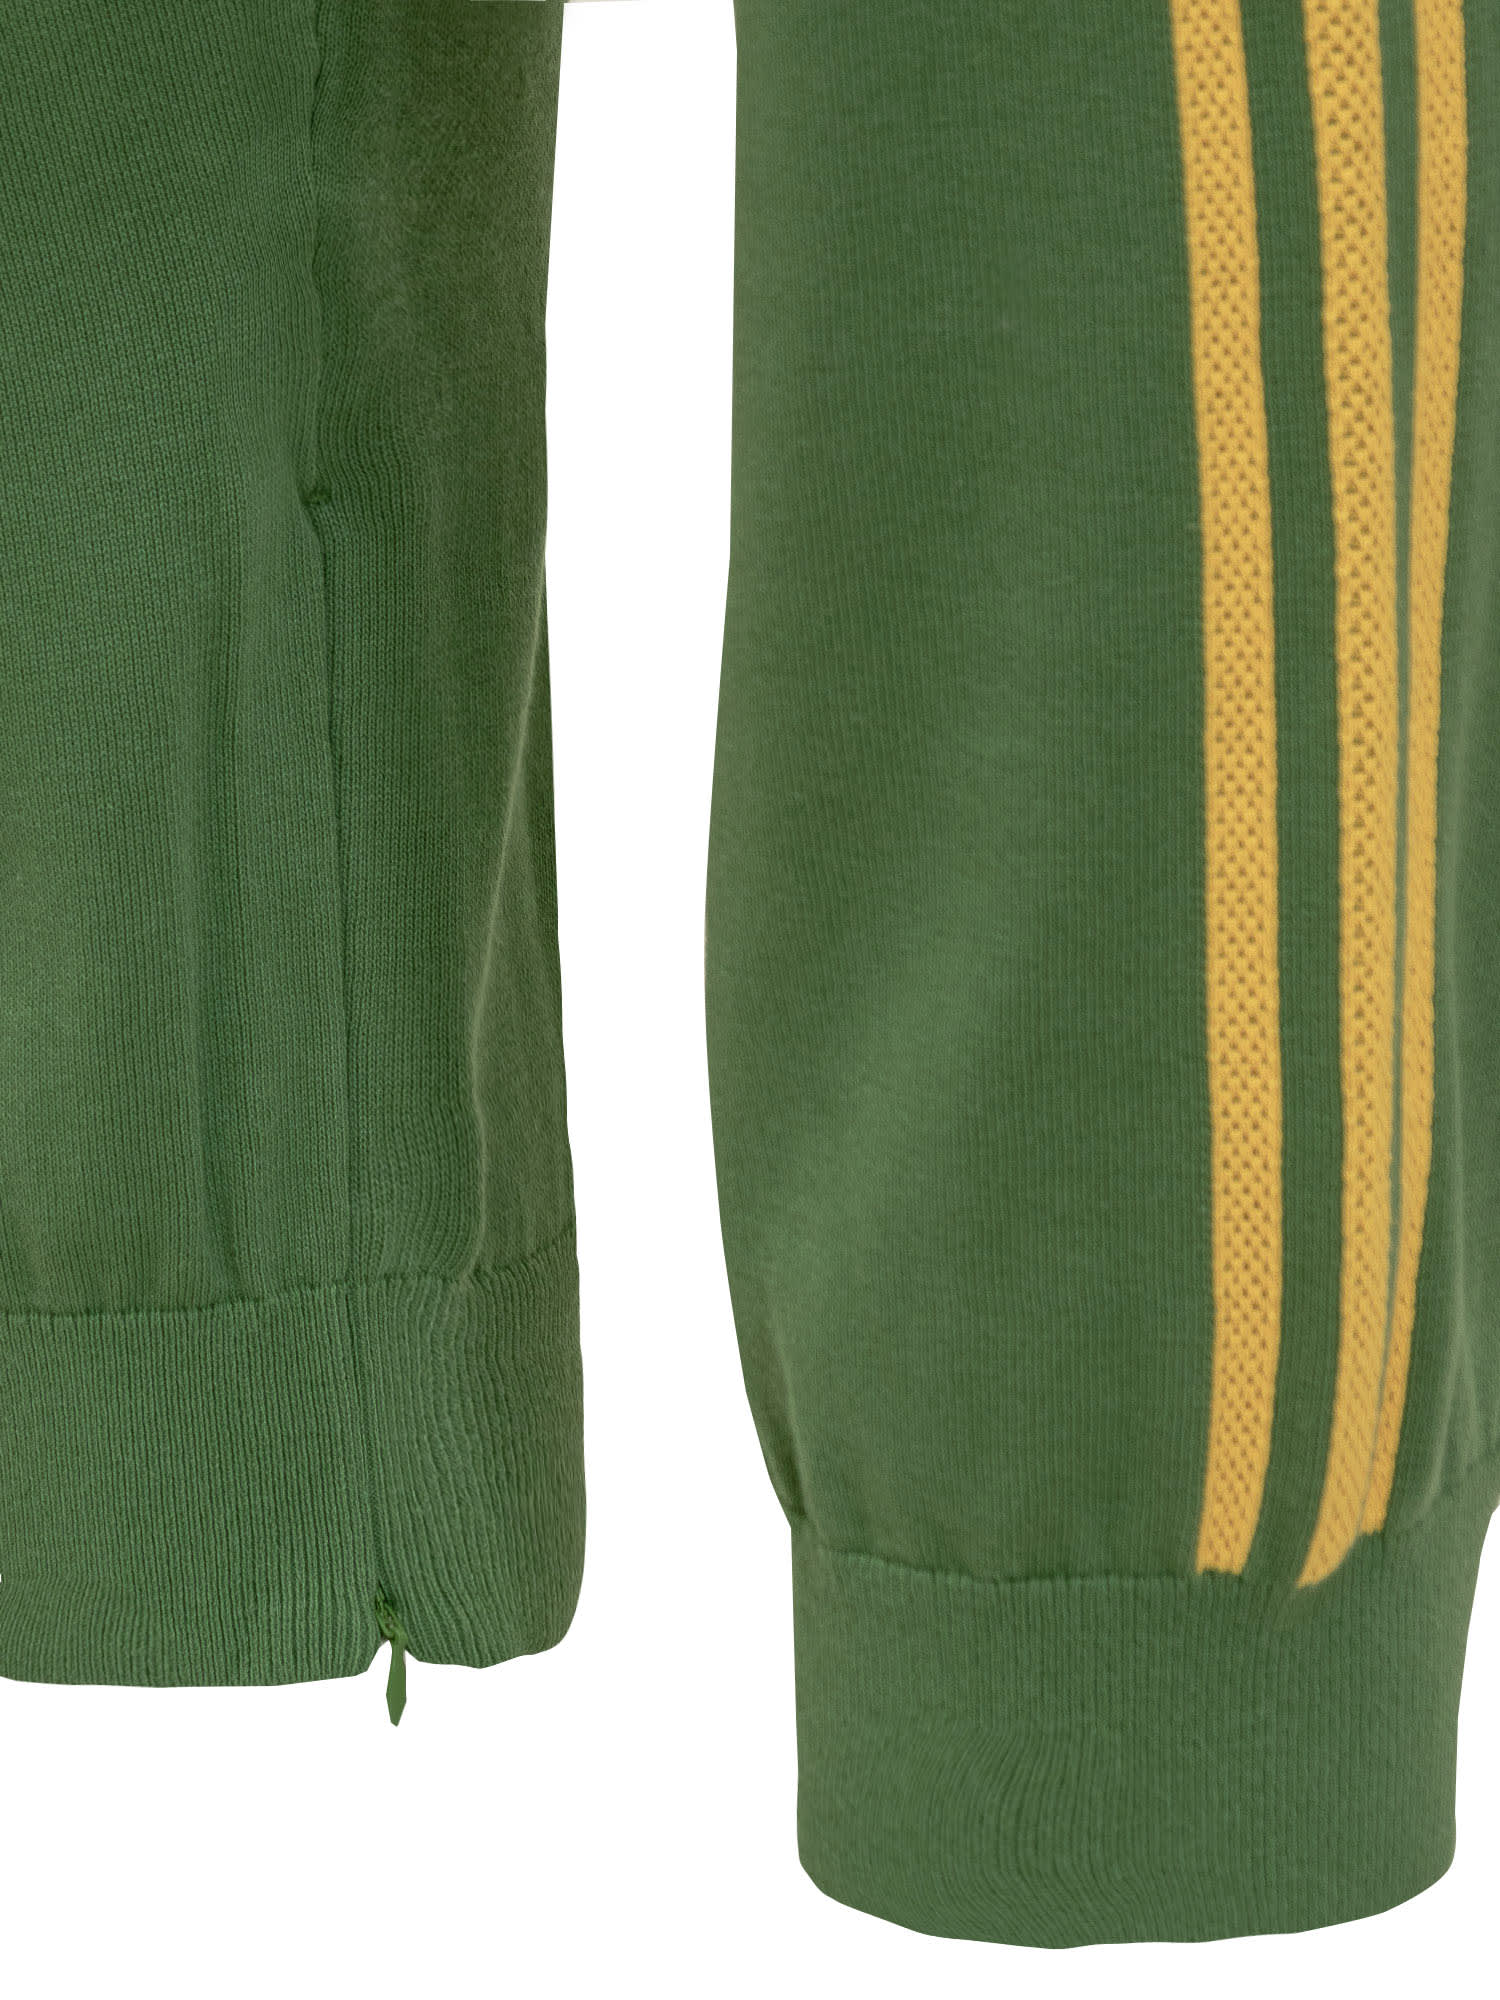 Shop Adidas Originals By Wales Bonner Adidas Original By Wales Bonner Knit Trouser. In Crew Green